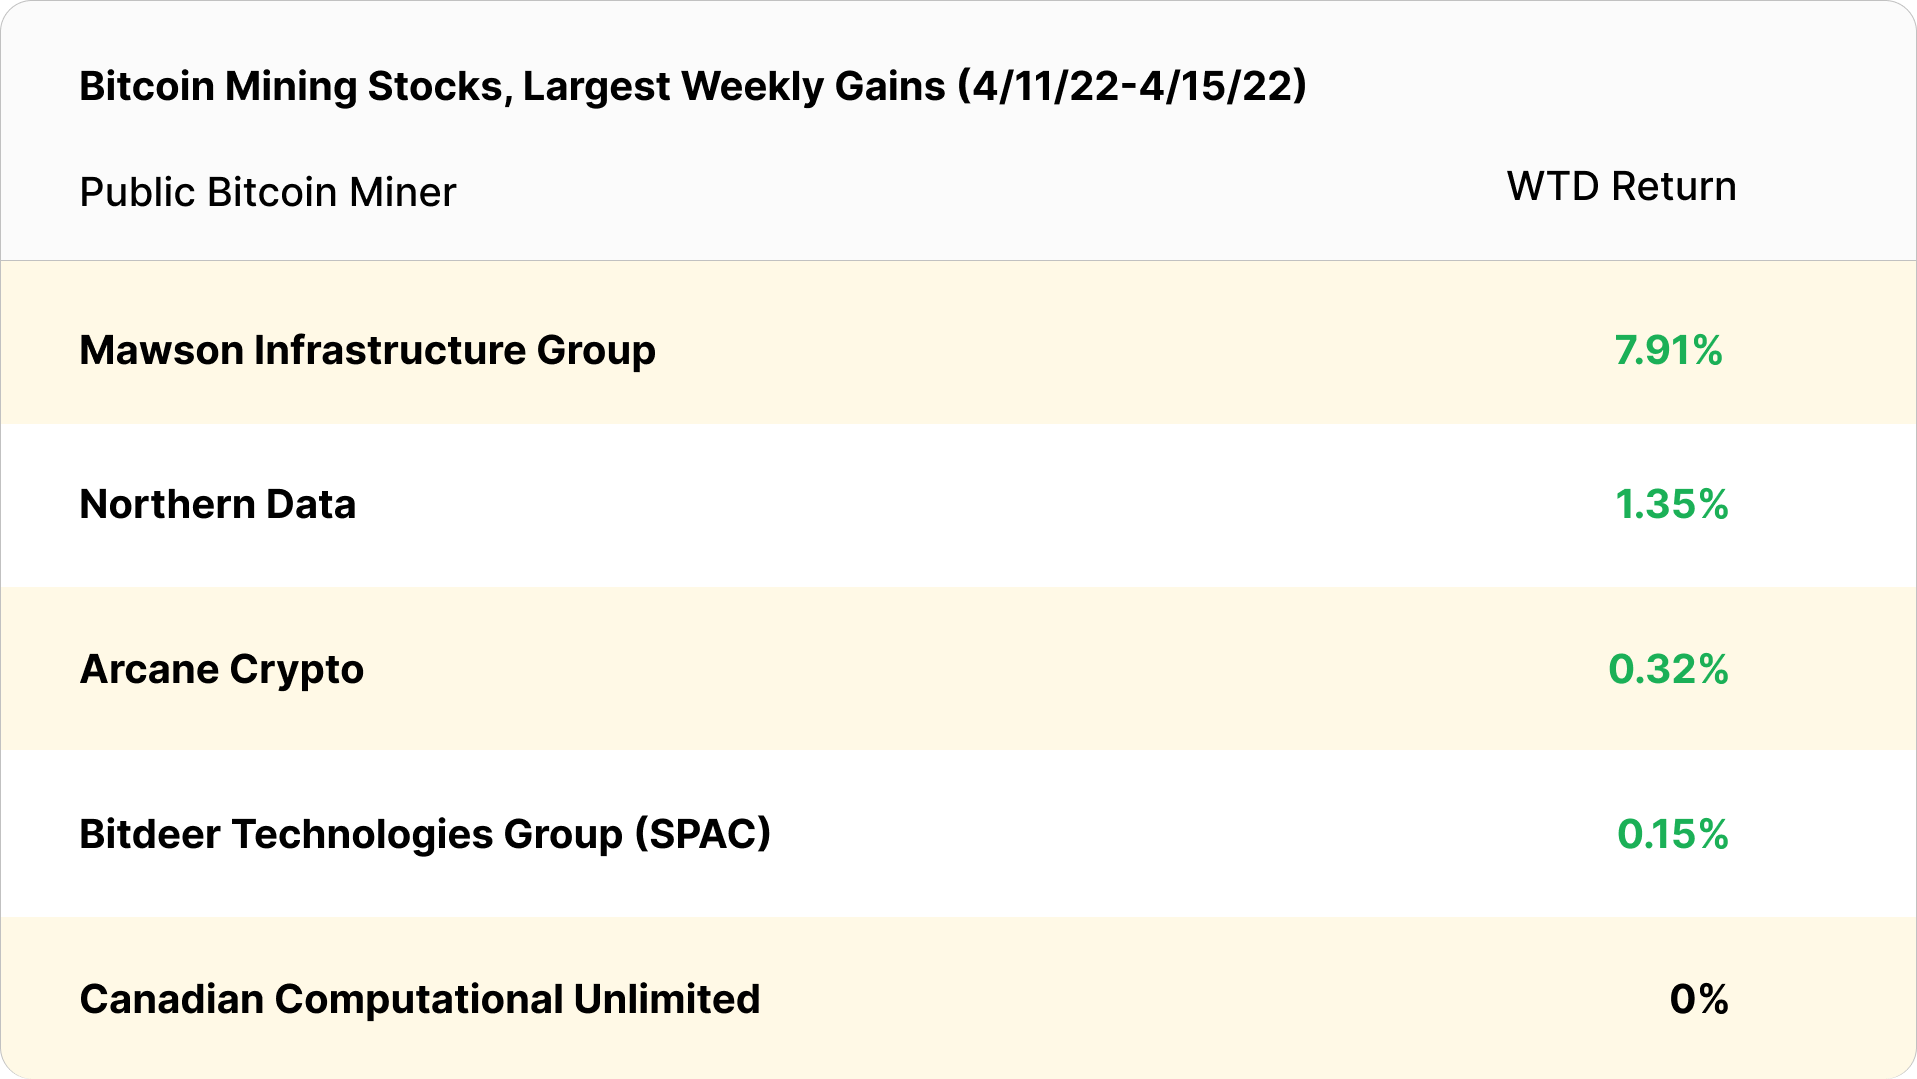 bitcoin mining stocks weekly gains (April 11 - April 15, 2022)